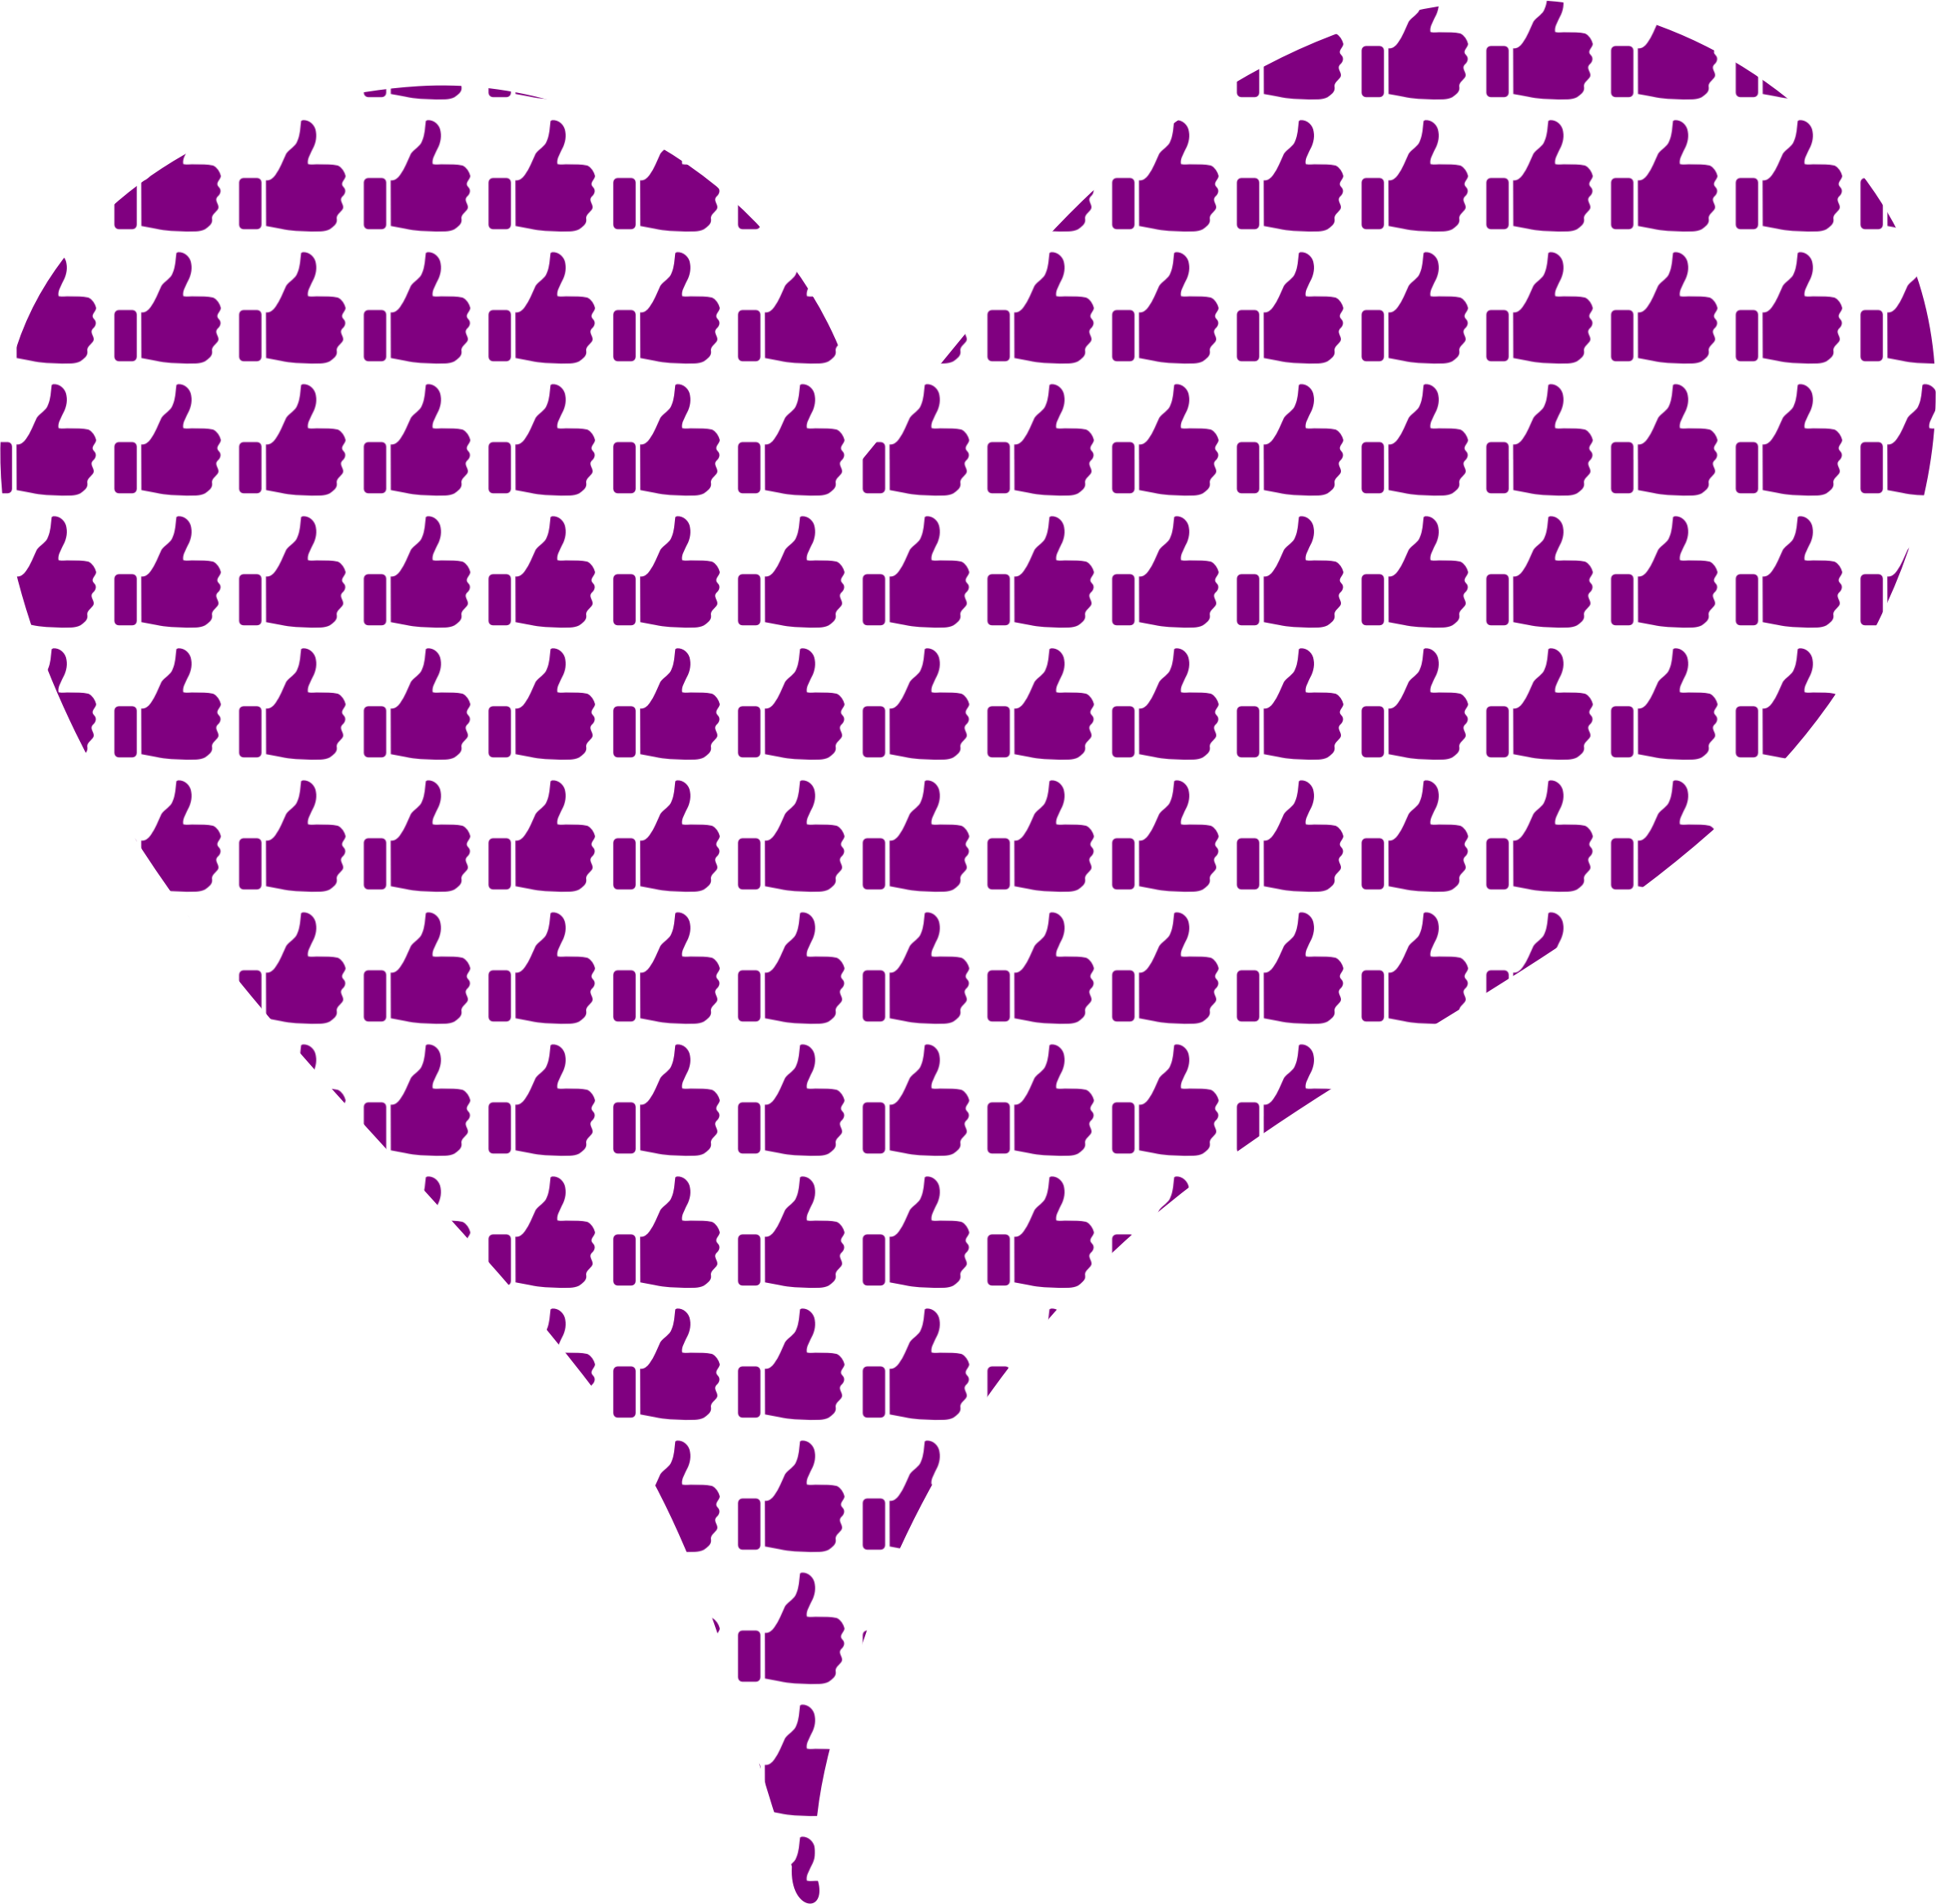 clipart heart purple